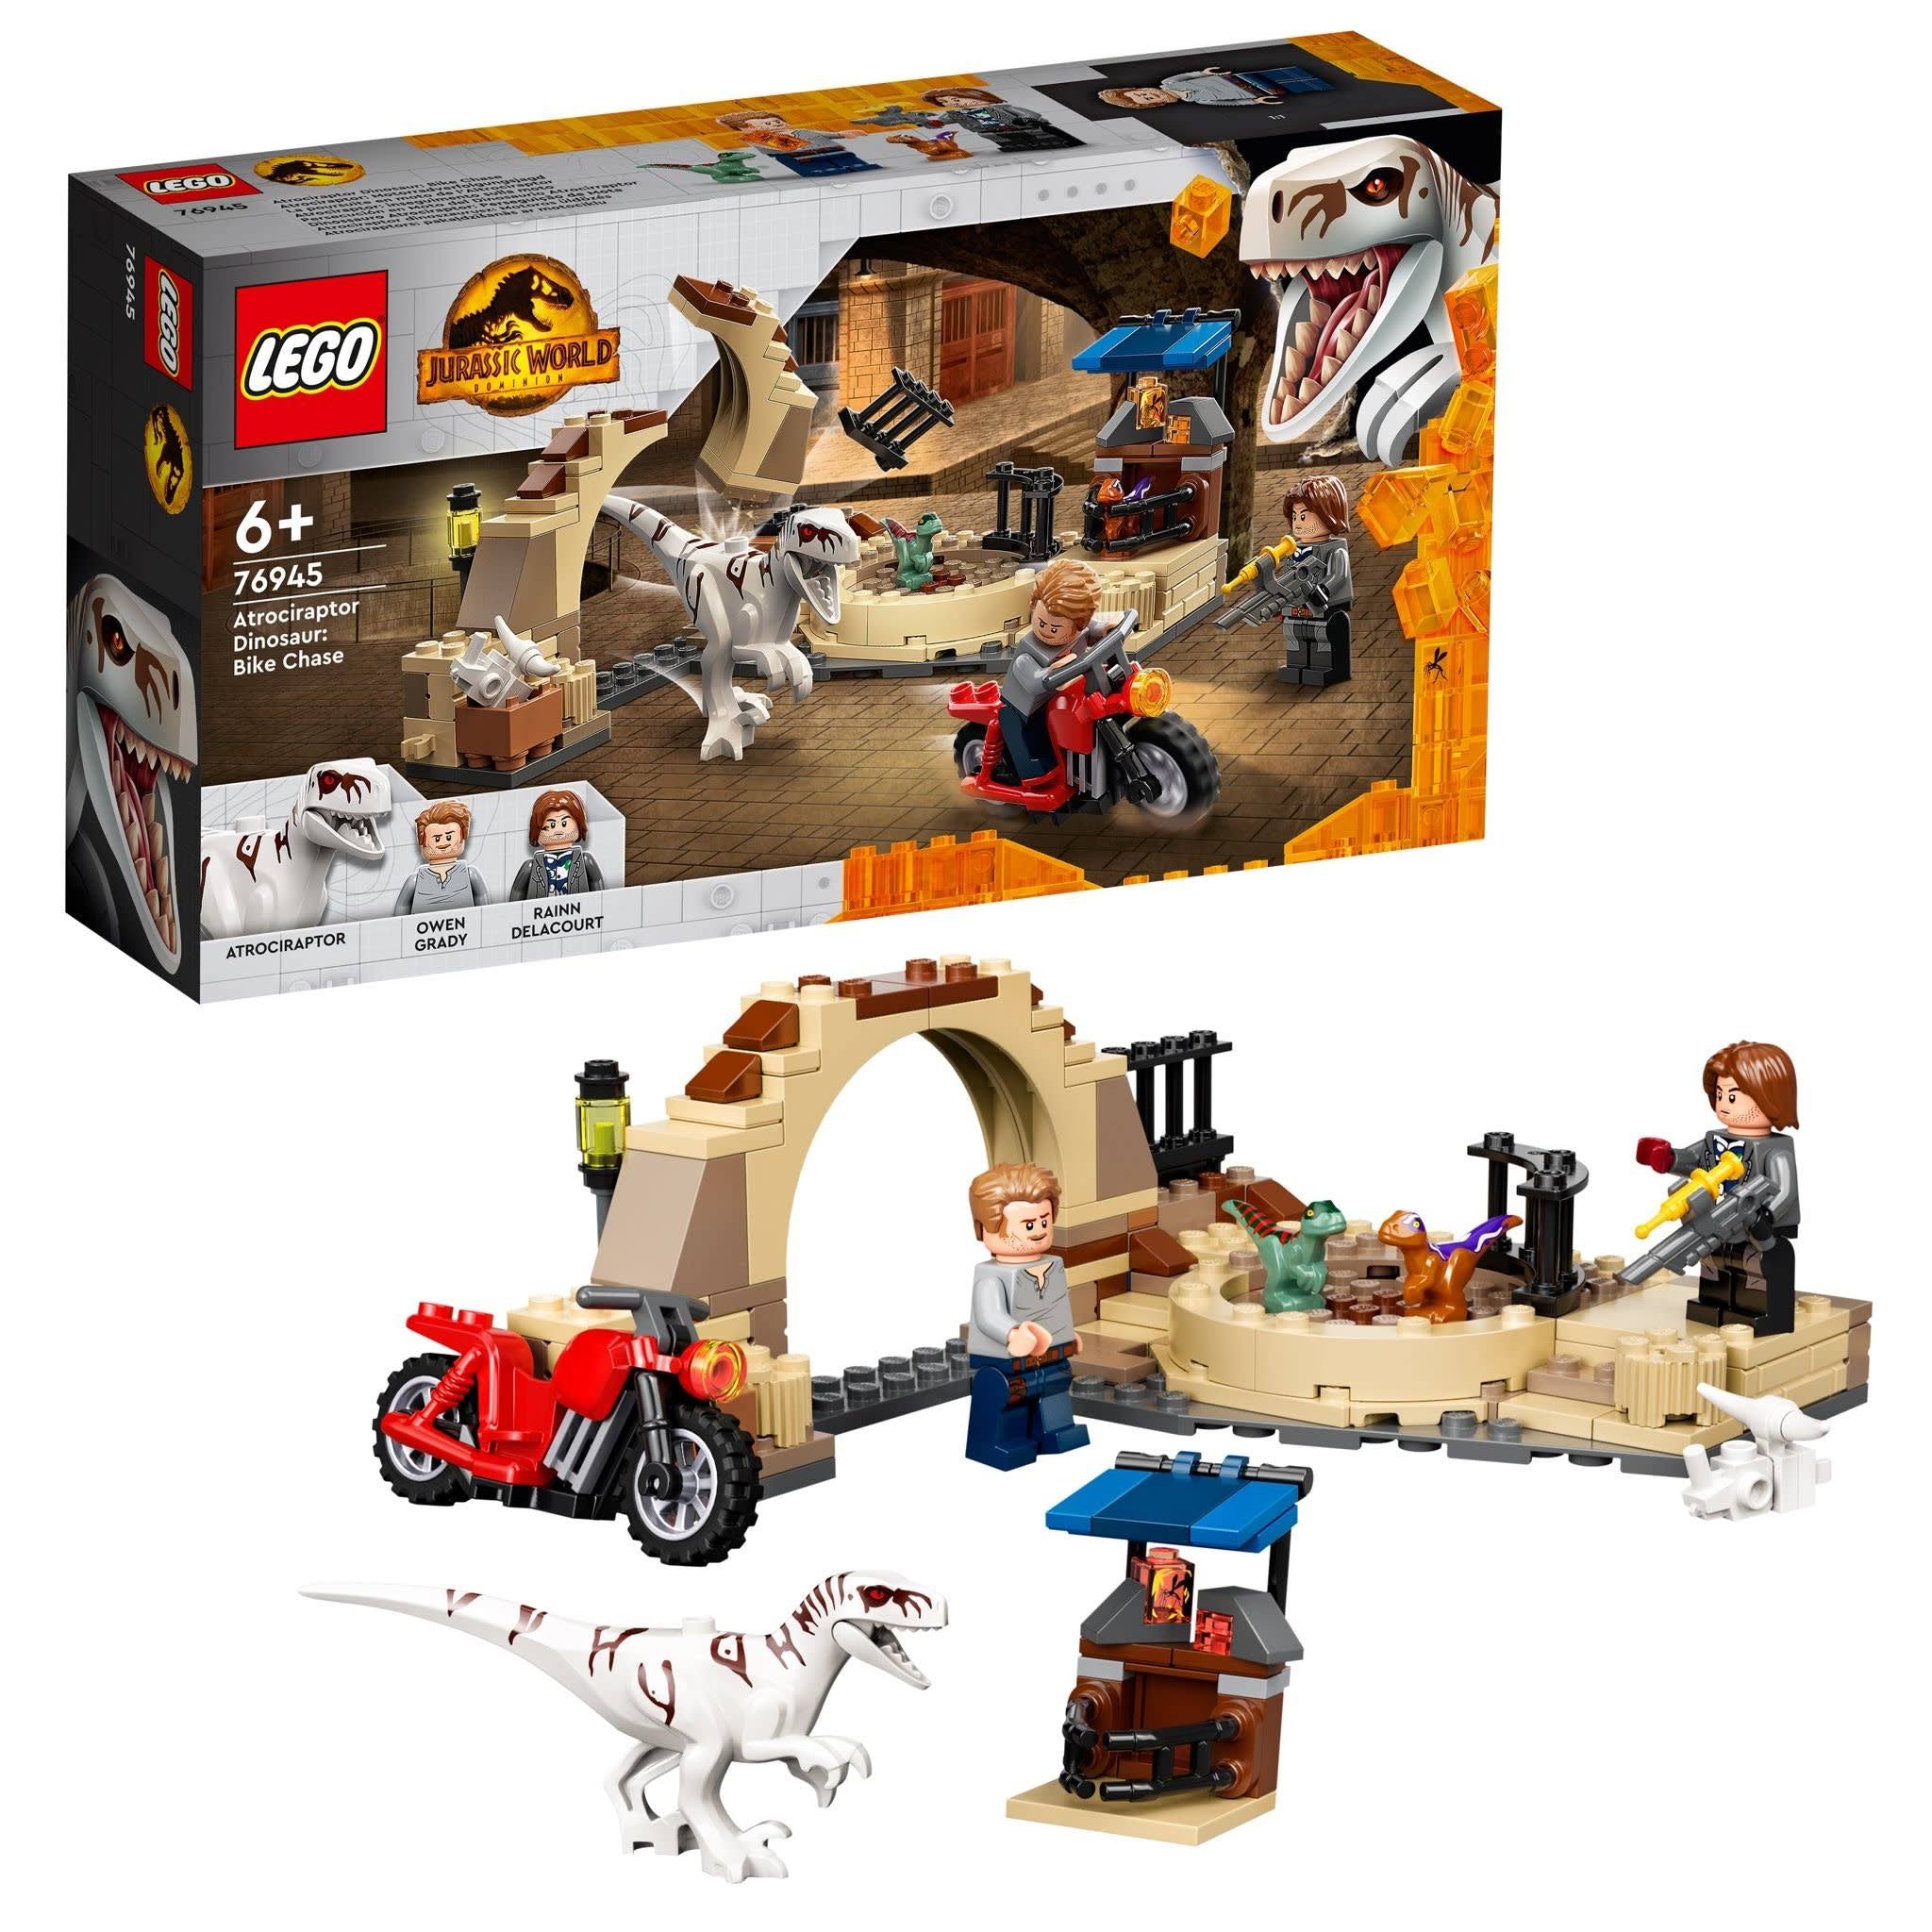 LEGO Jurassic World - 76945 - Atrociraptor Dinosaur: Bike Chase